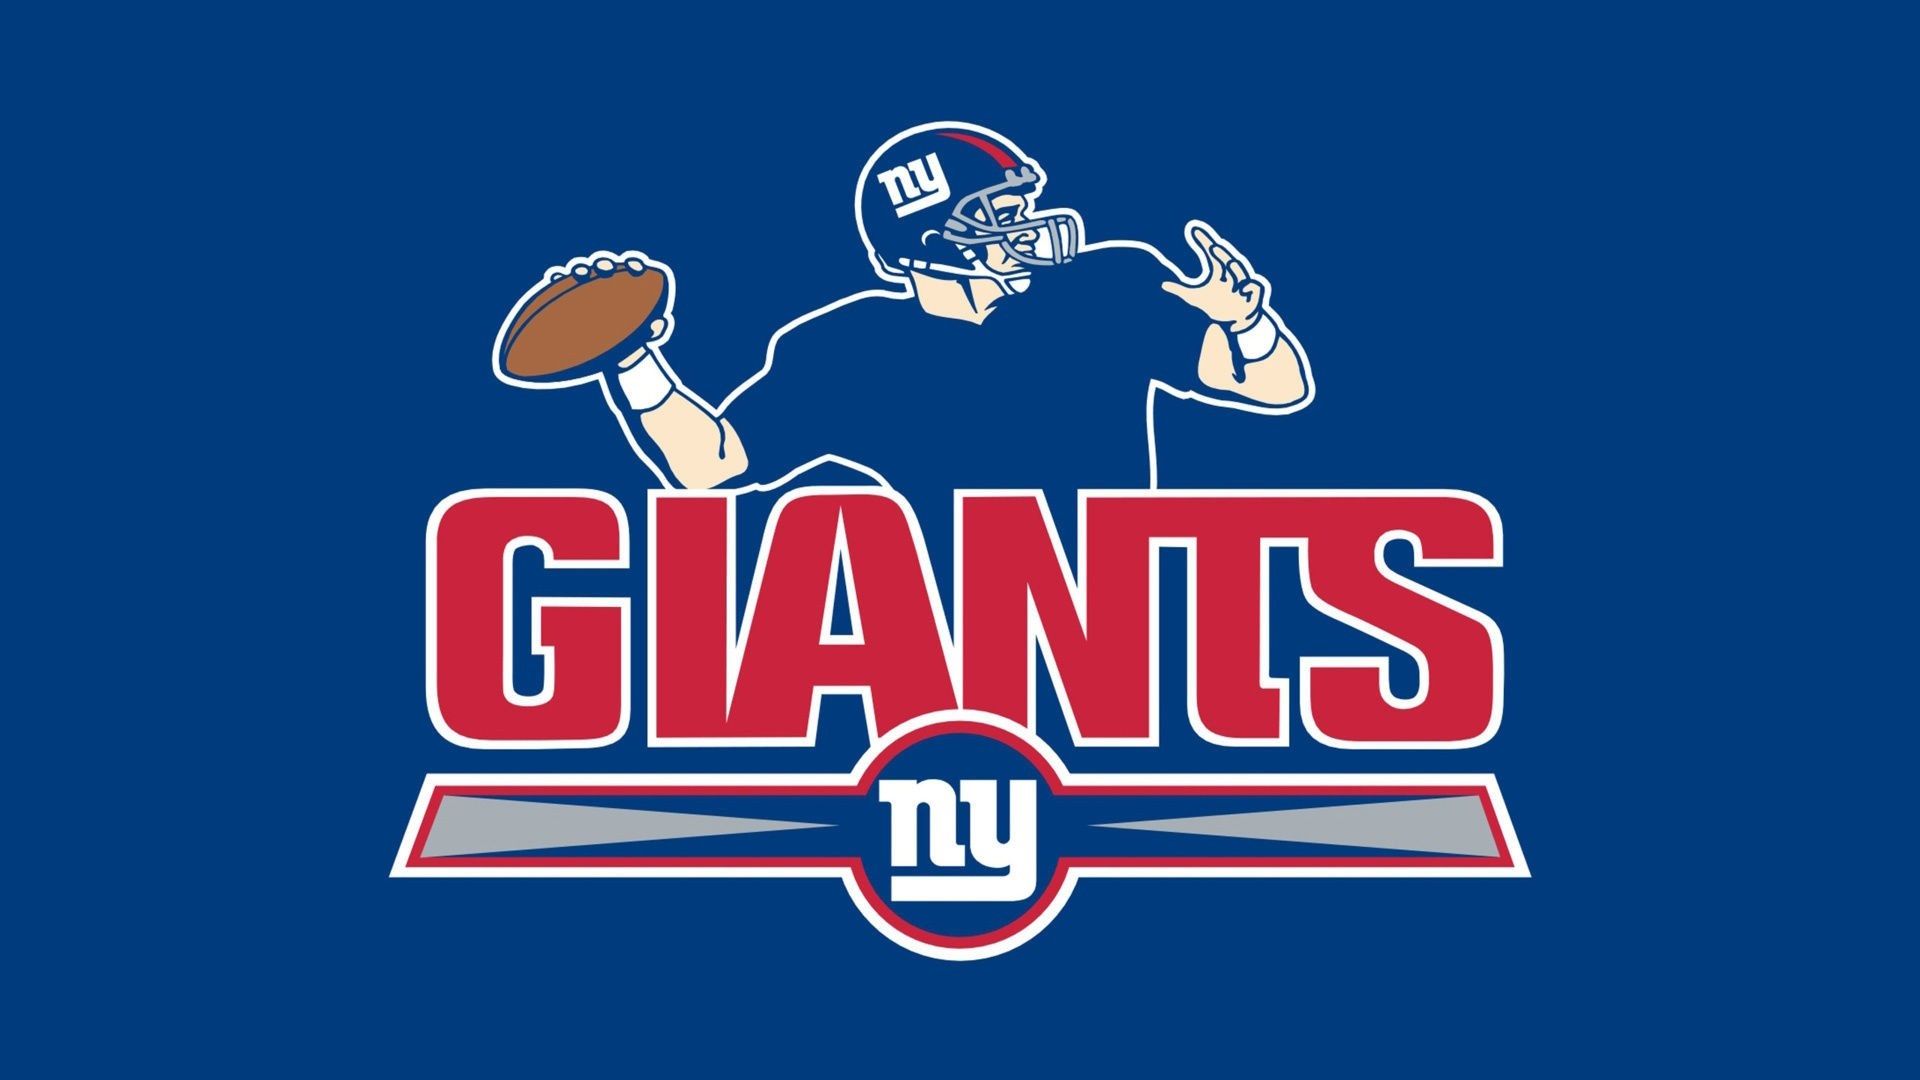 New York Giants Wallpaper For Mac Background NFL Football Wallpaper. New york giants, Nfl football wallpaper, Giants